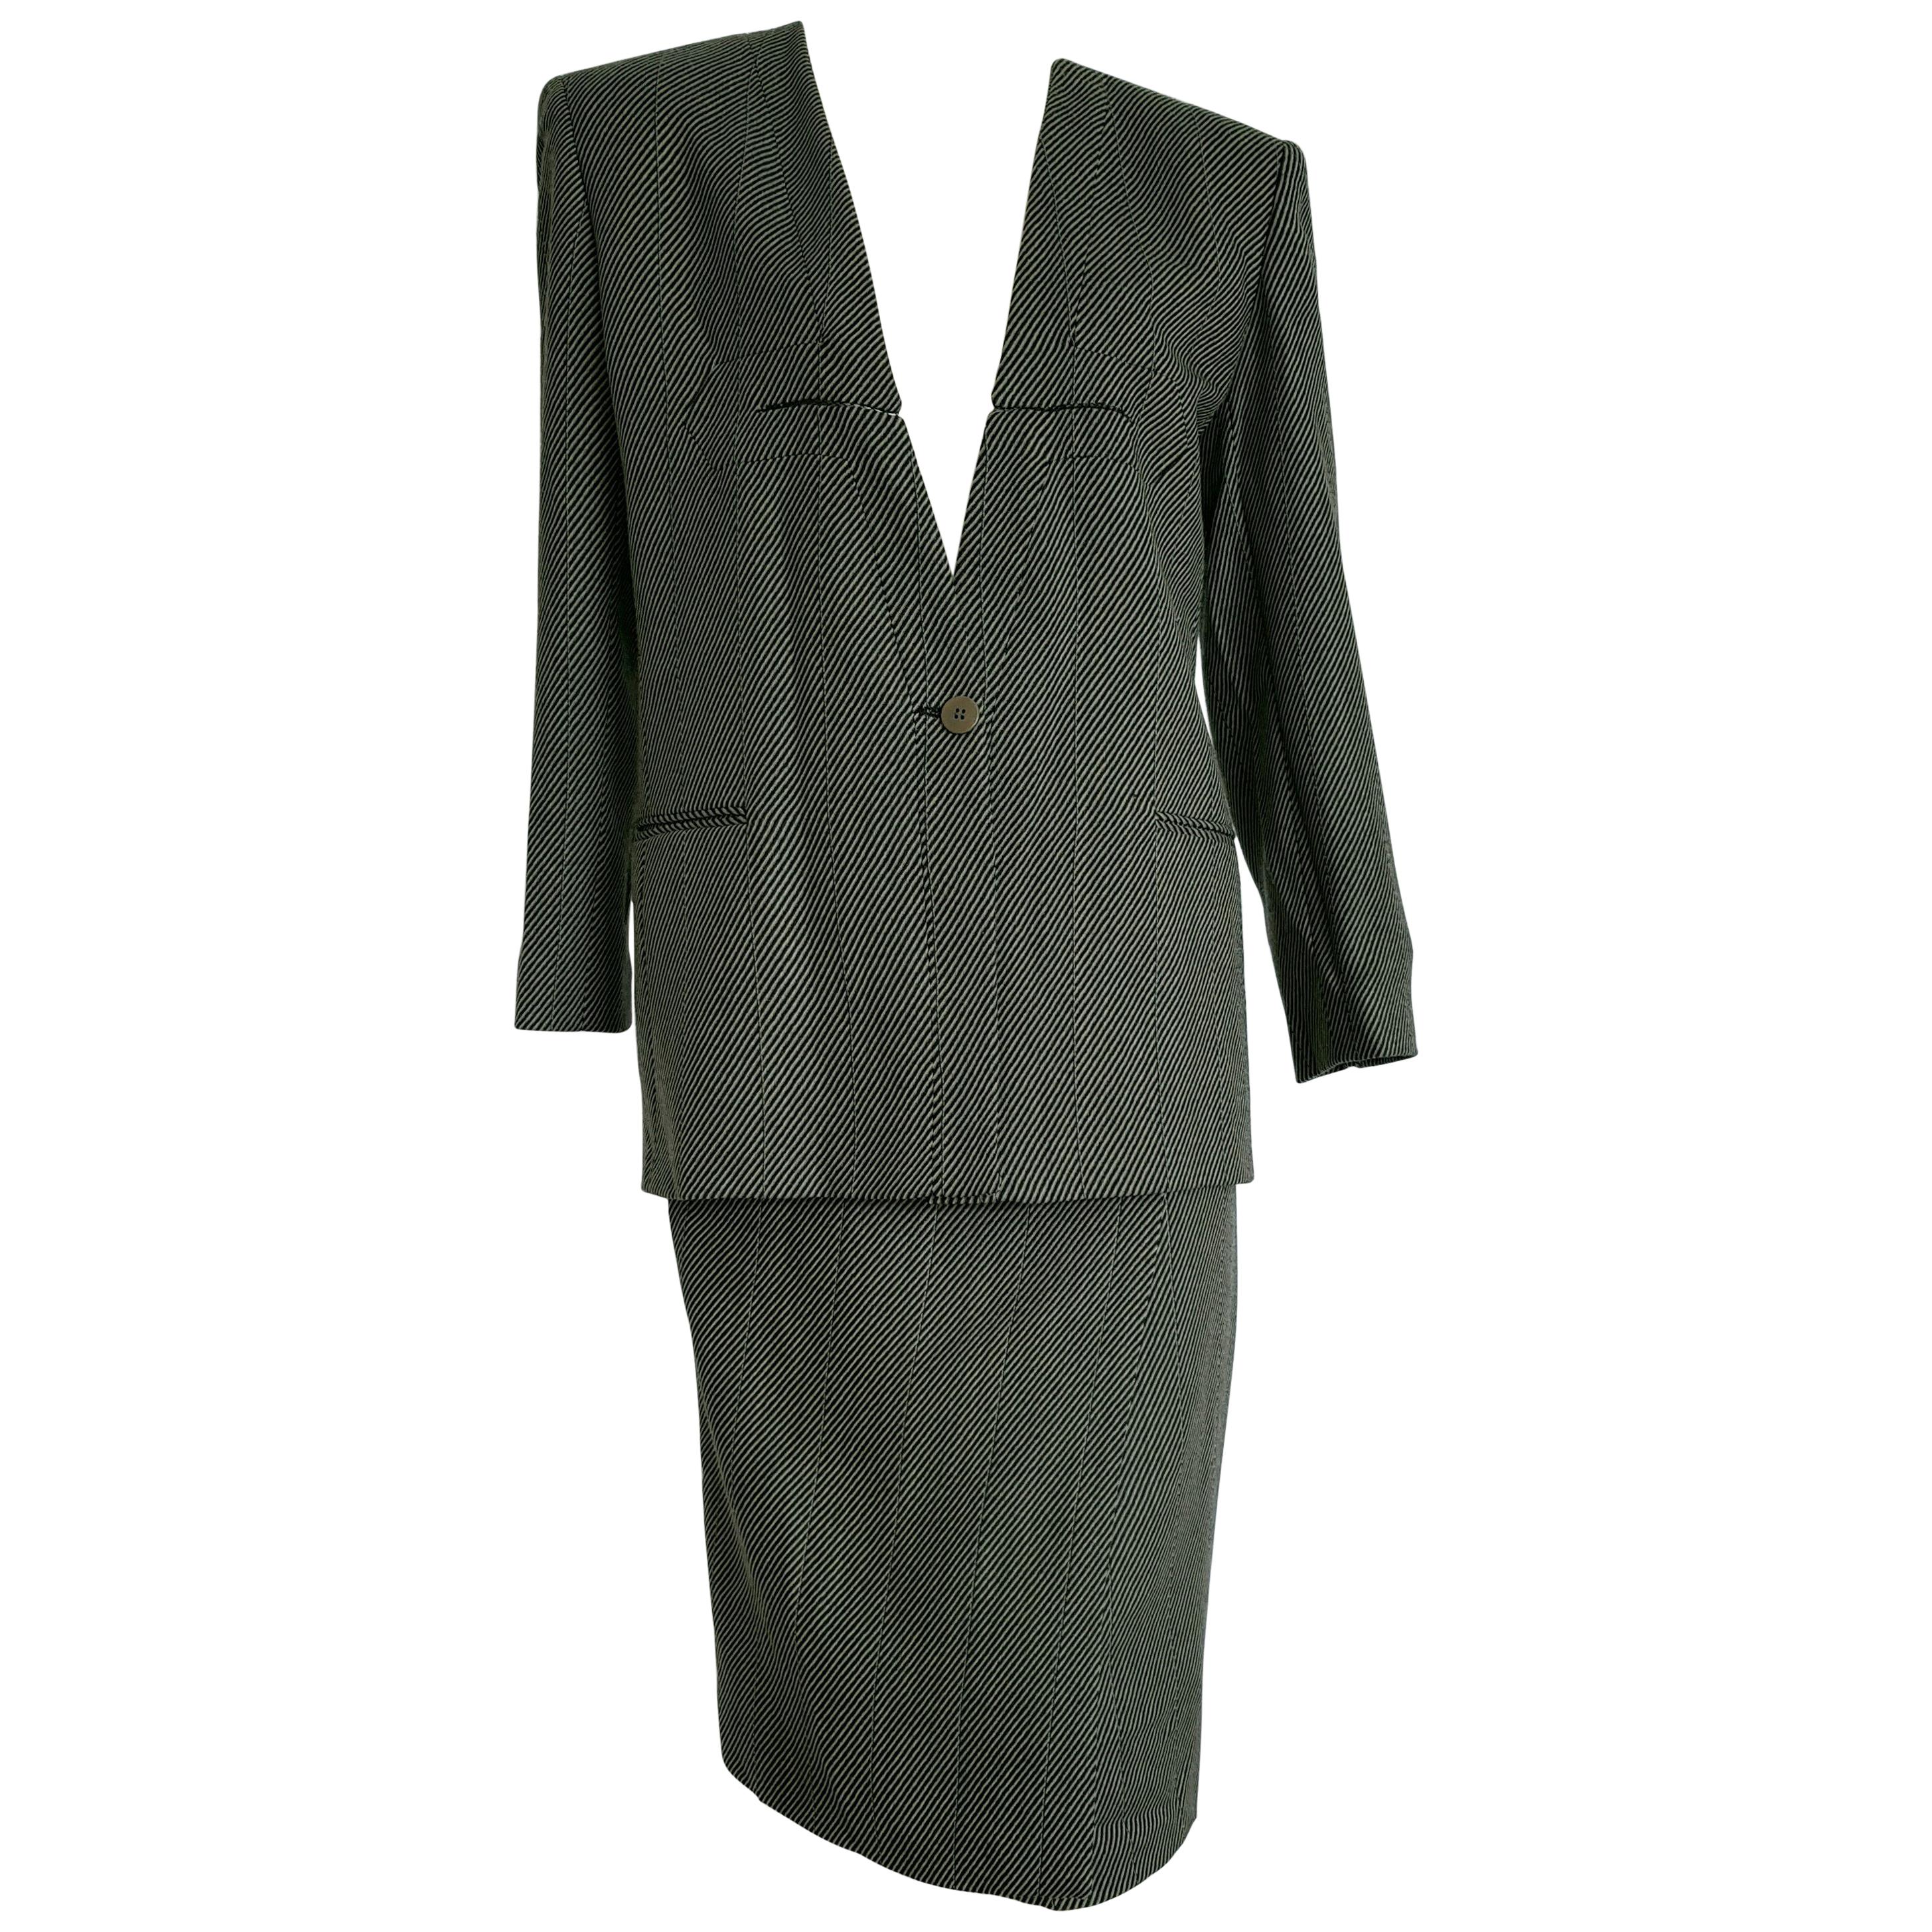 Giorgio ARMANI dark and light grey lines, jacket skirt wool suit - Unworn, New For Sale